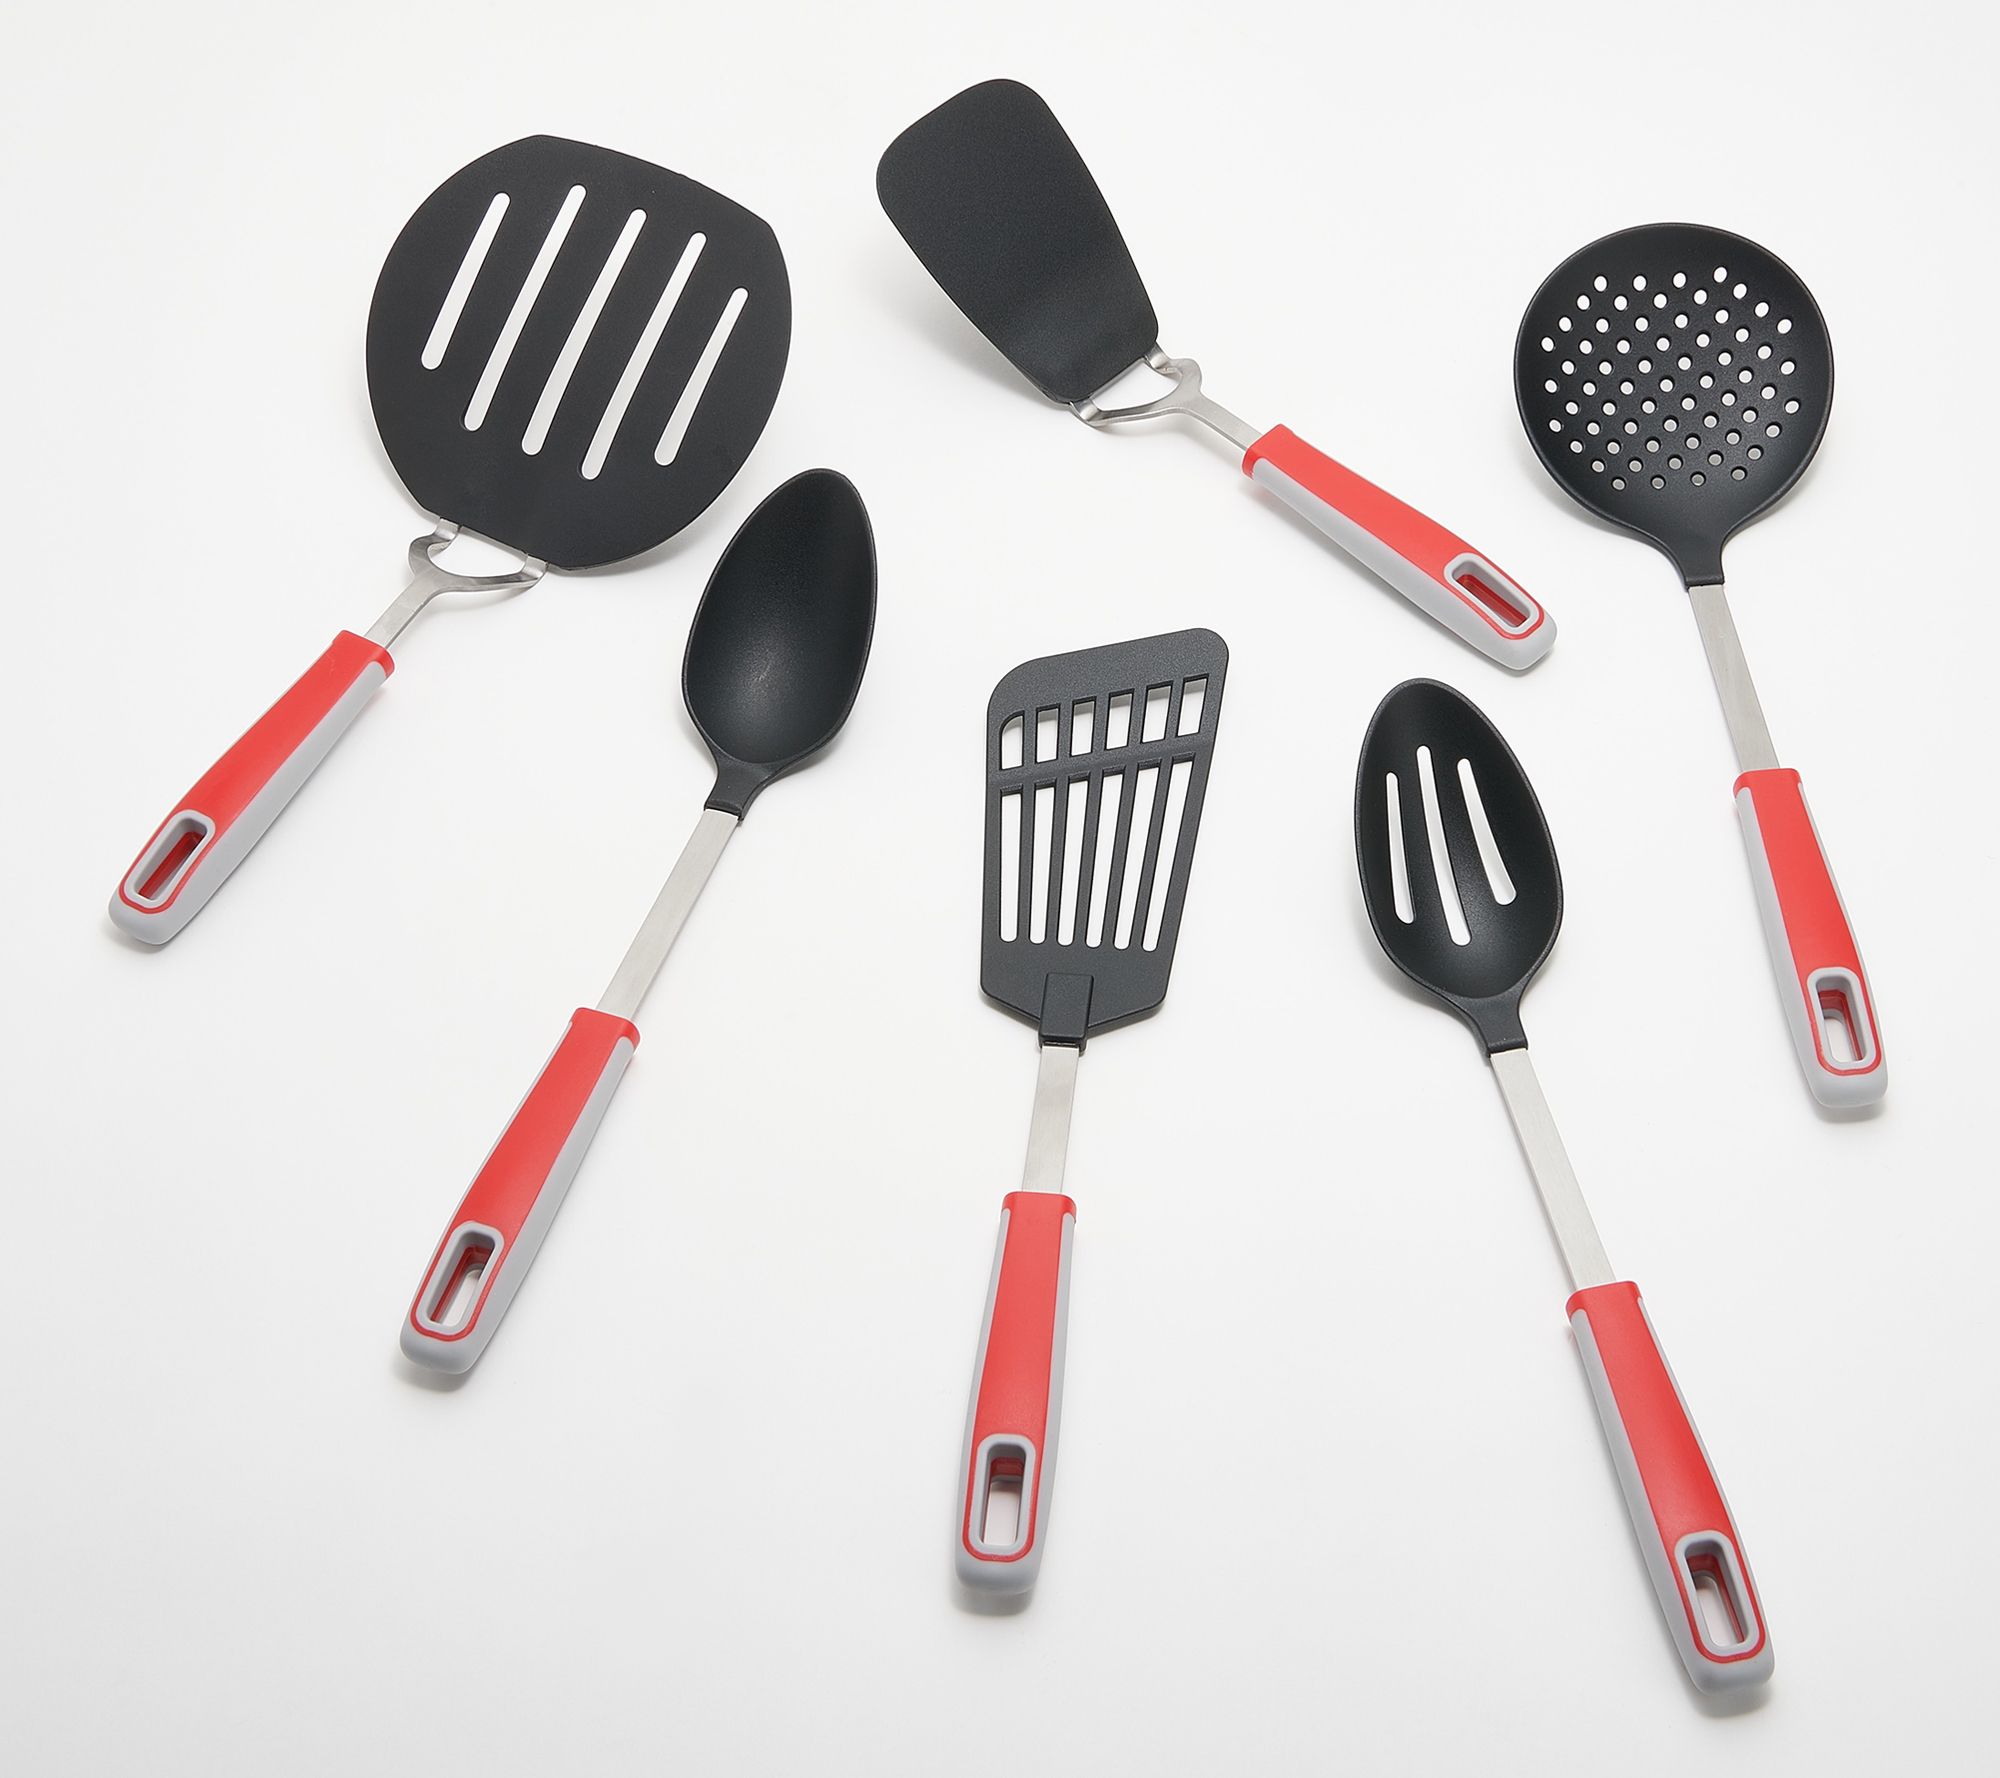 6 Essential Kitchen Tools